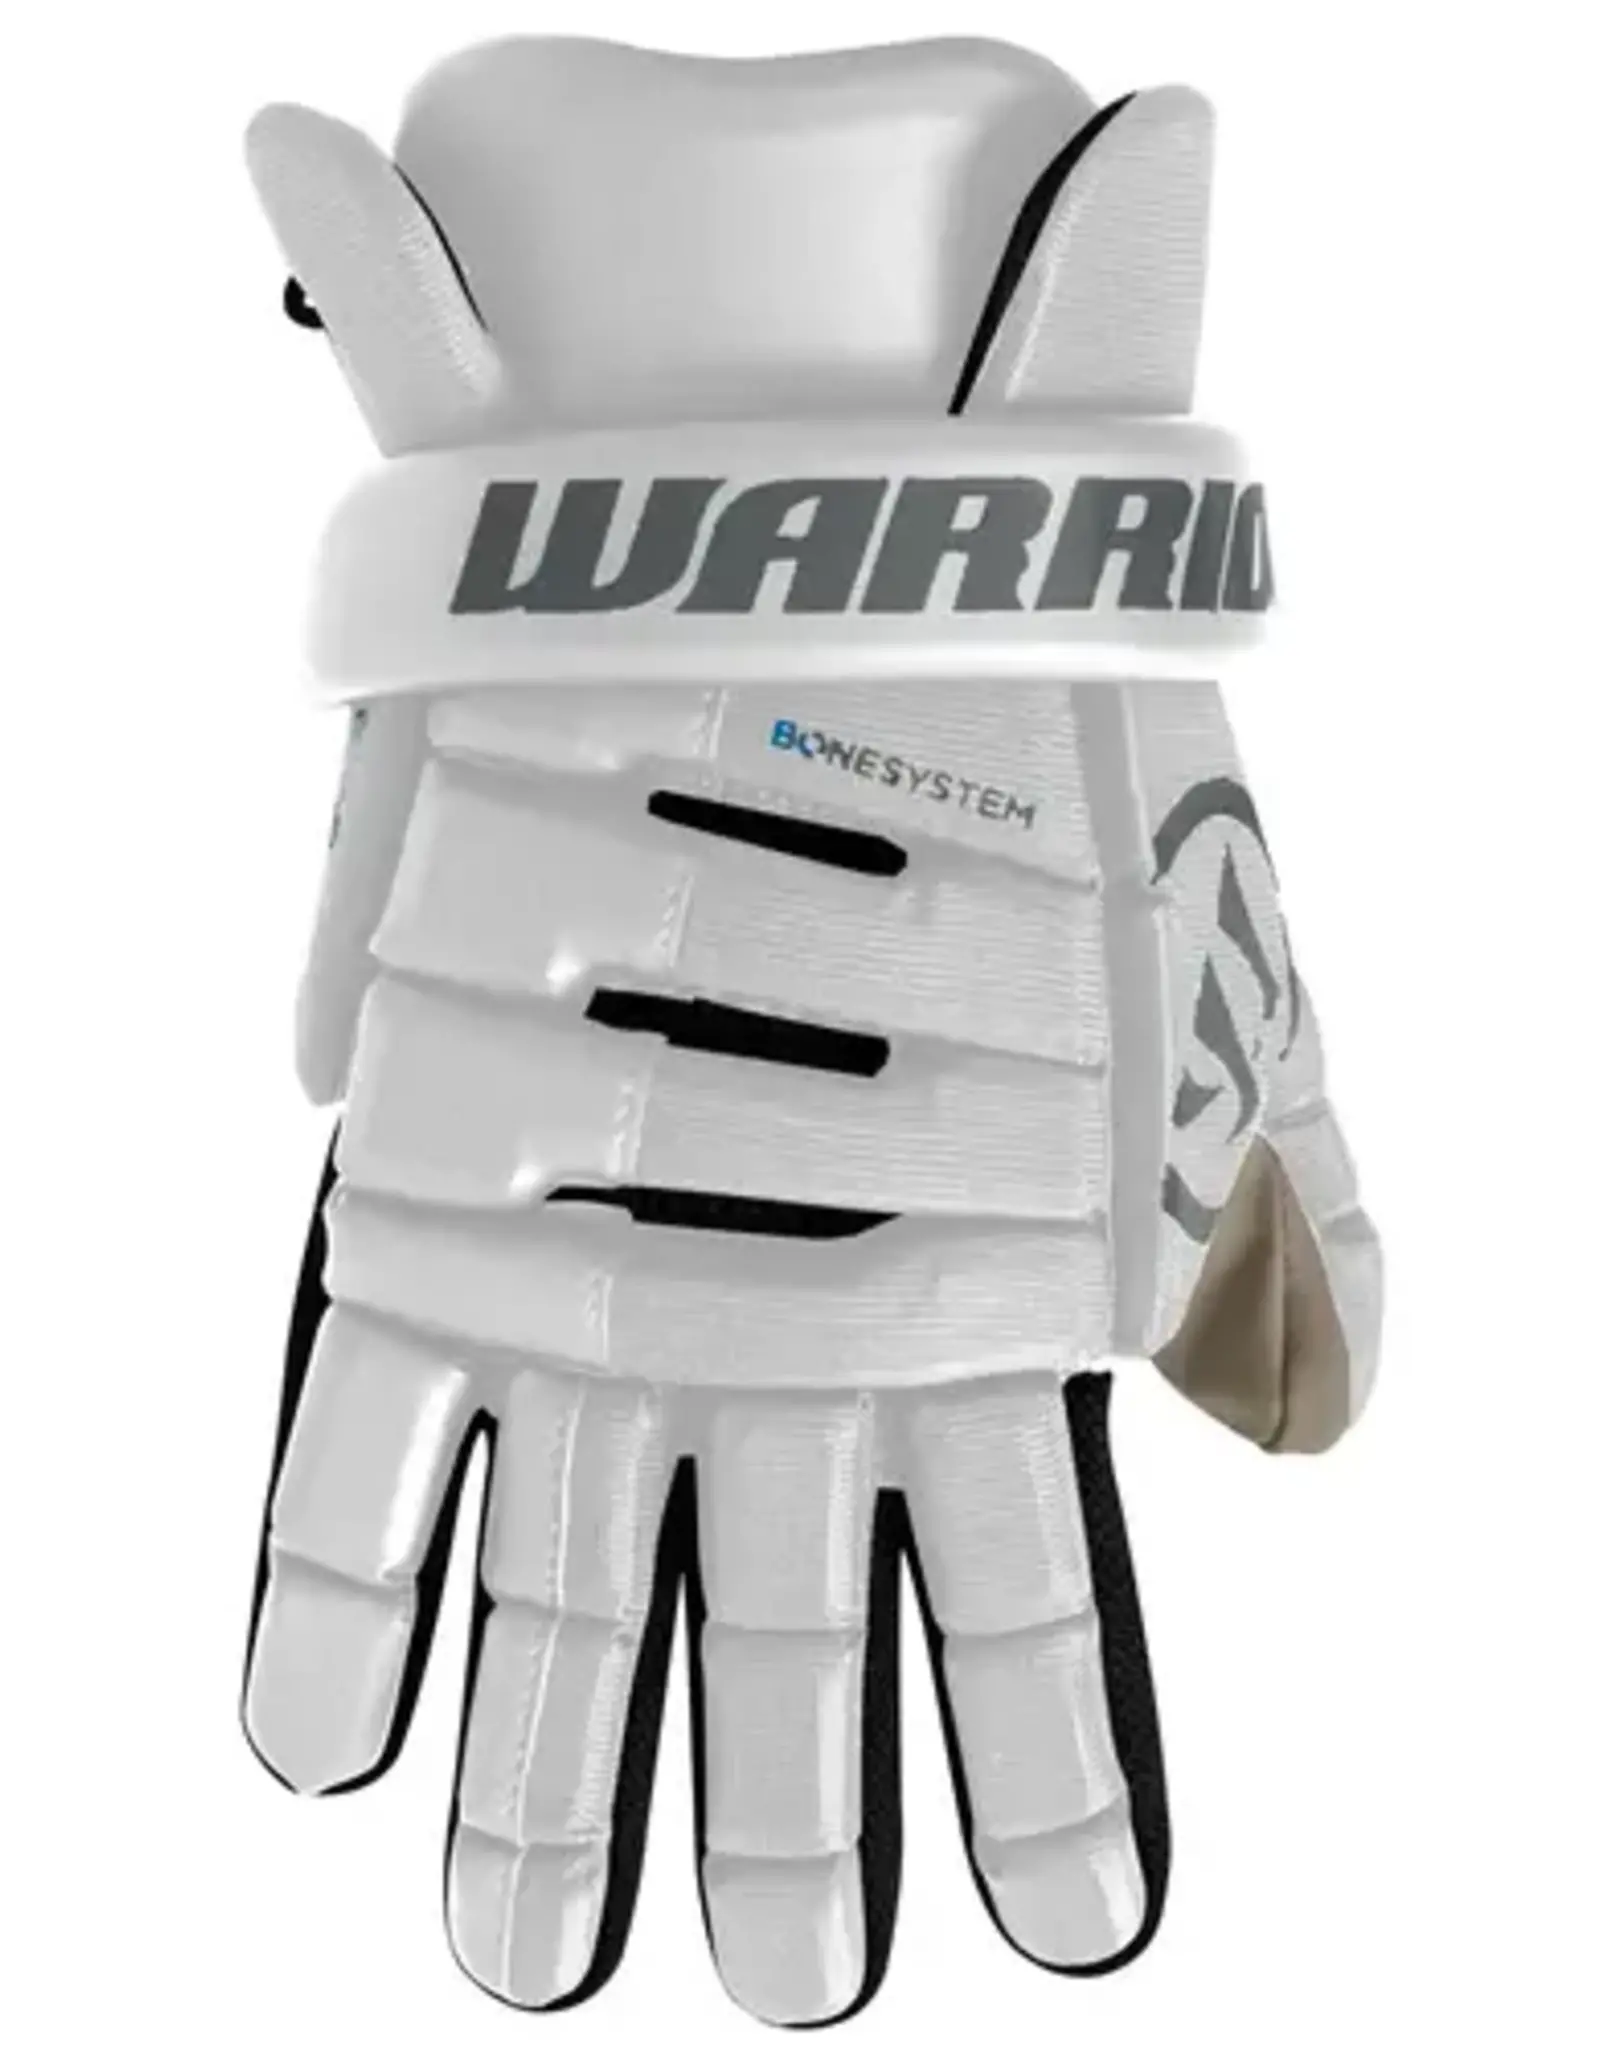 Warrior Warrior EVO FB Lacrosse Gloves